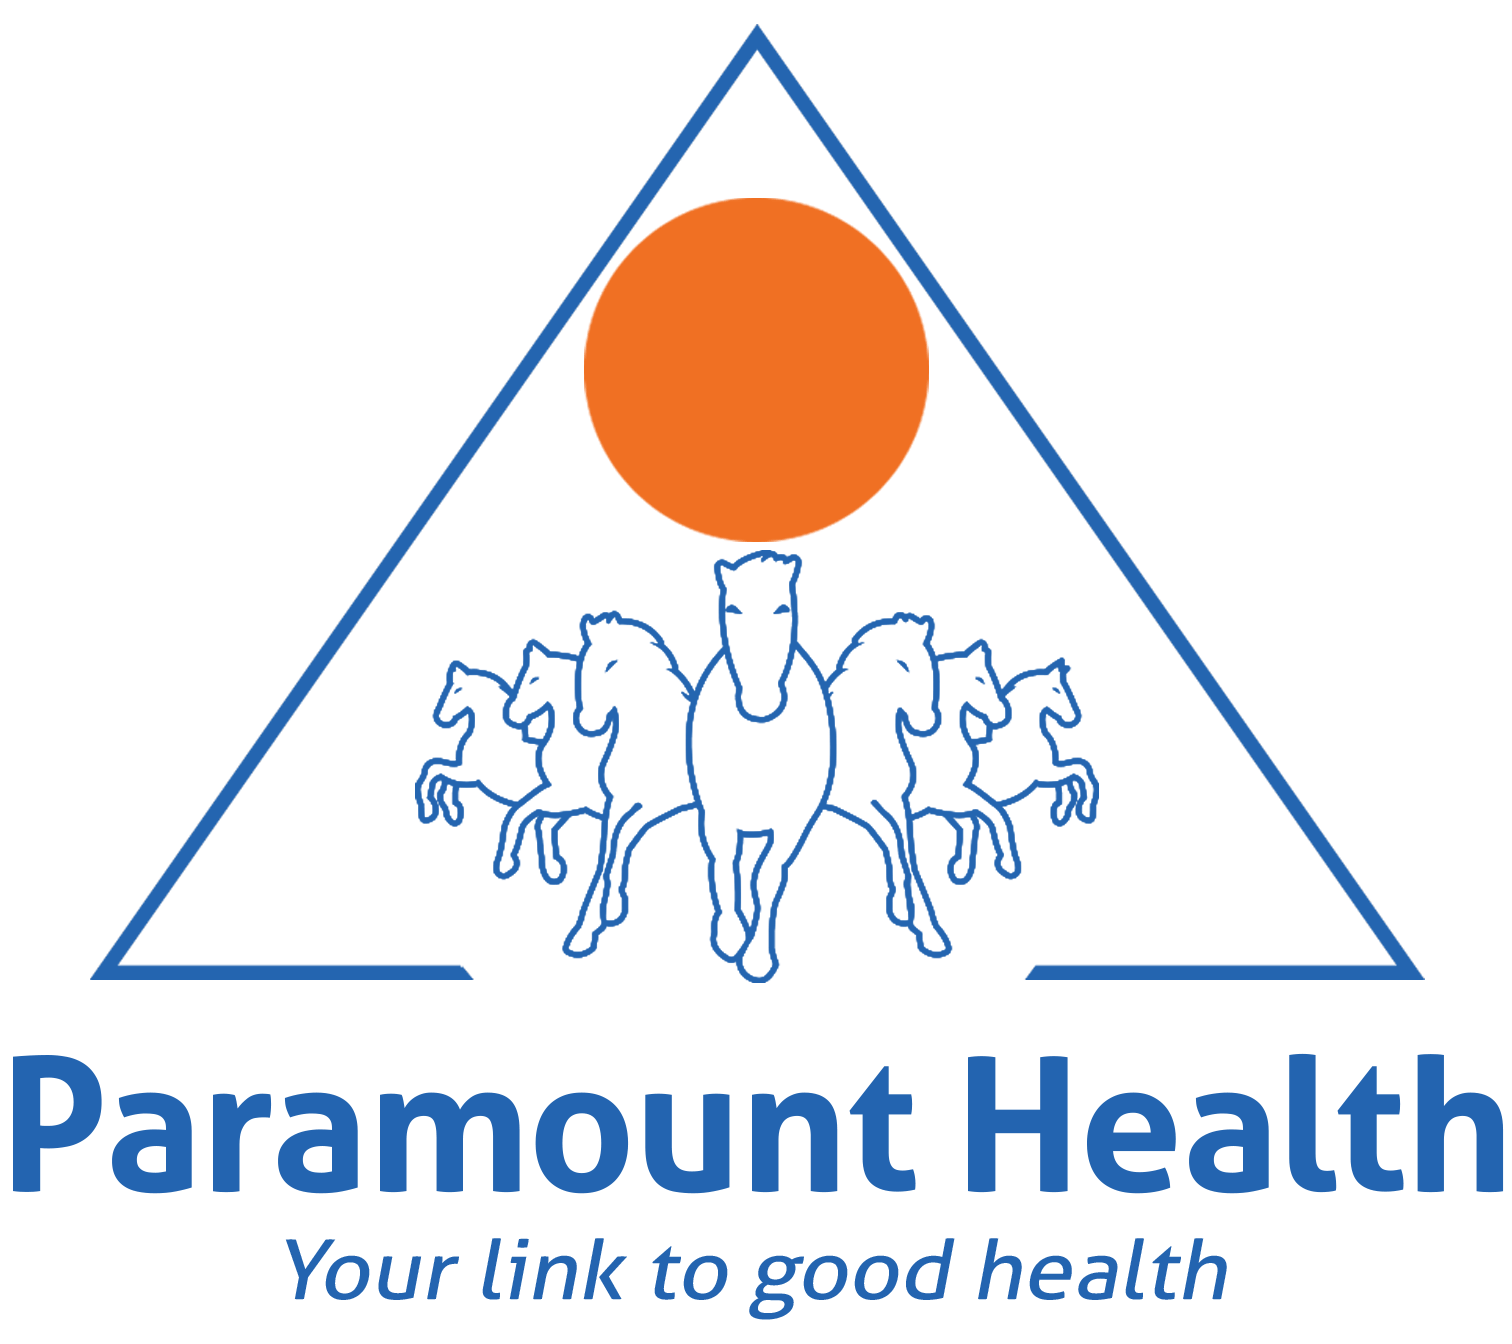 Paramount-Logo